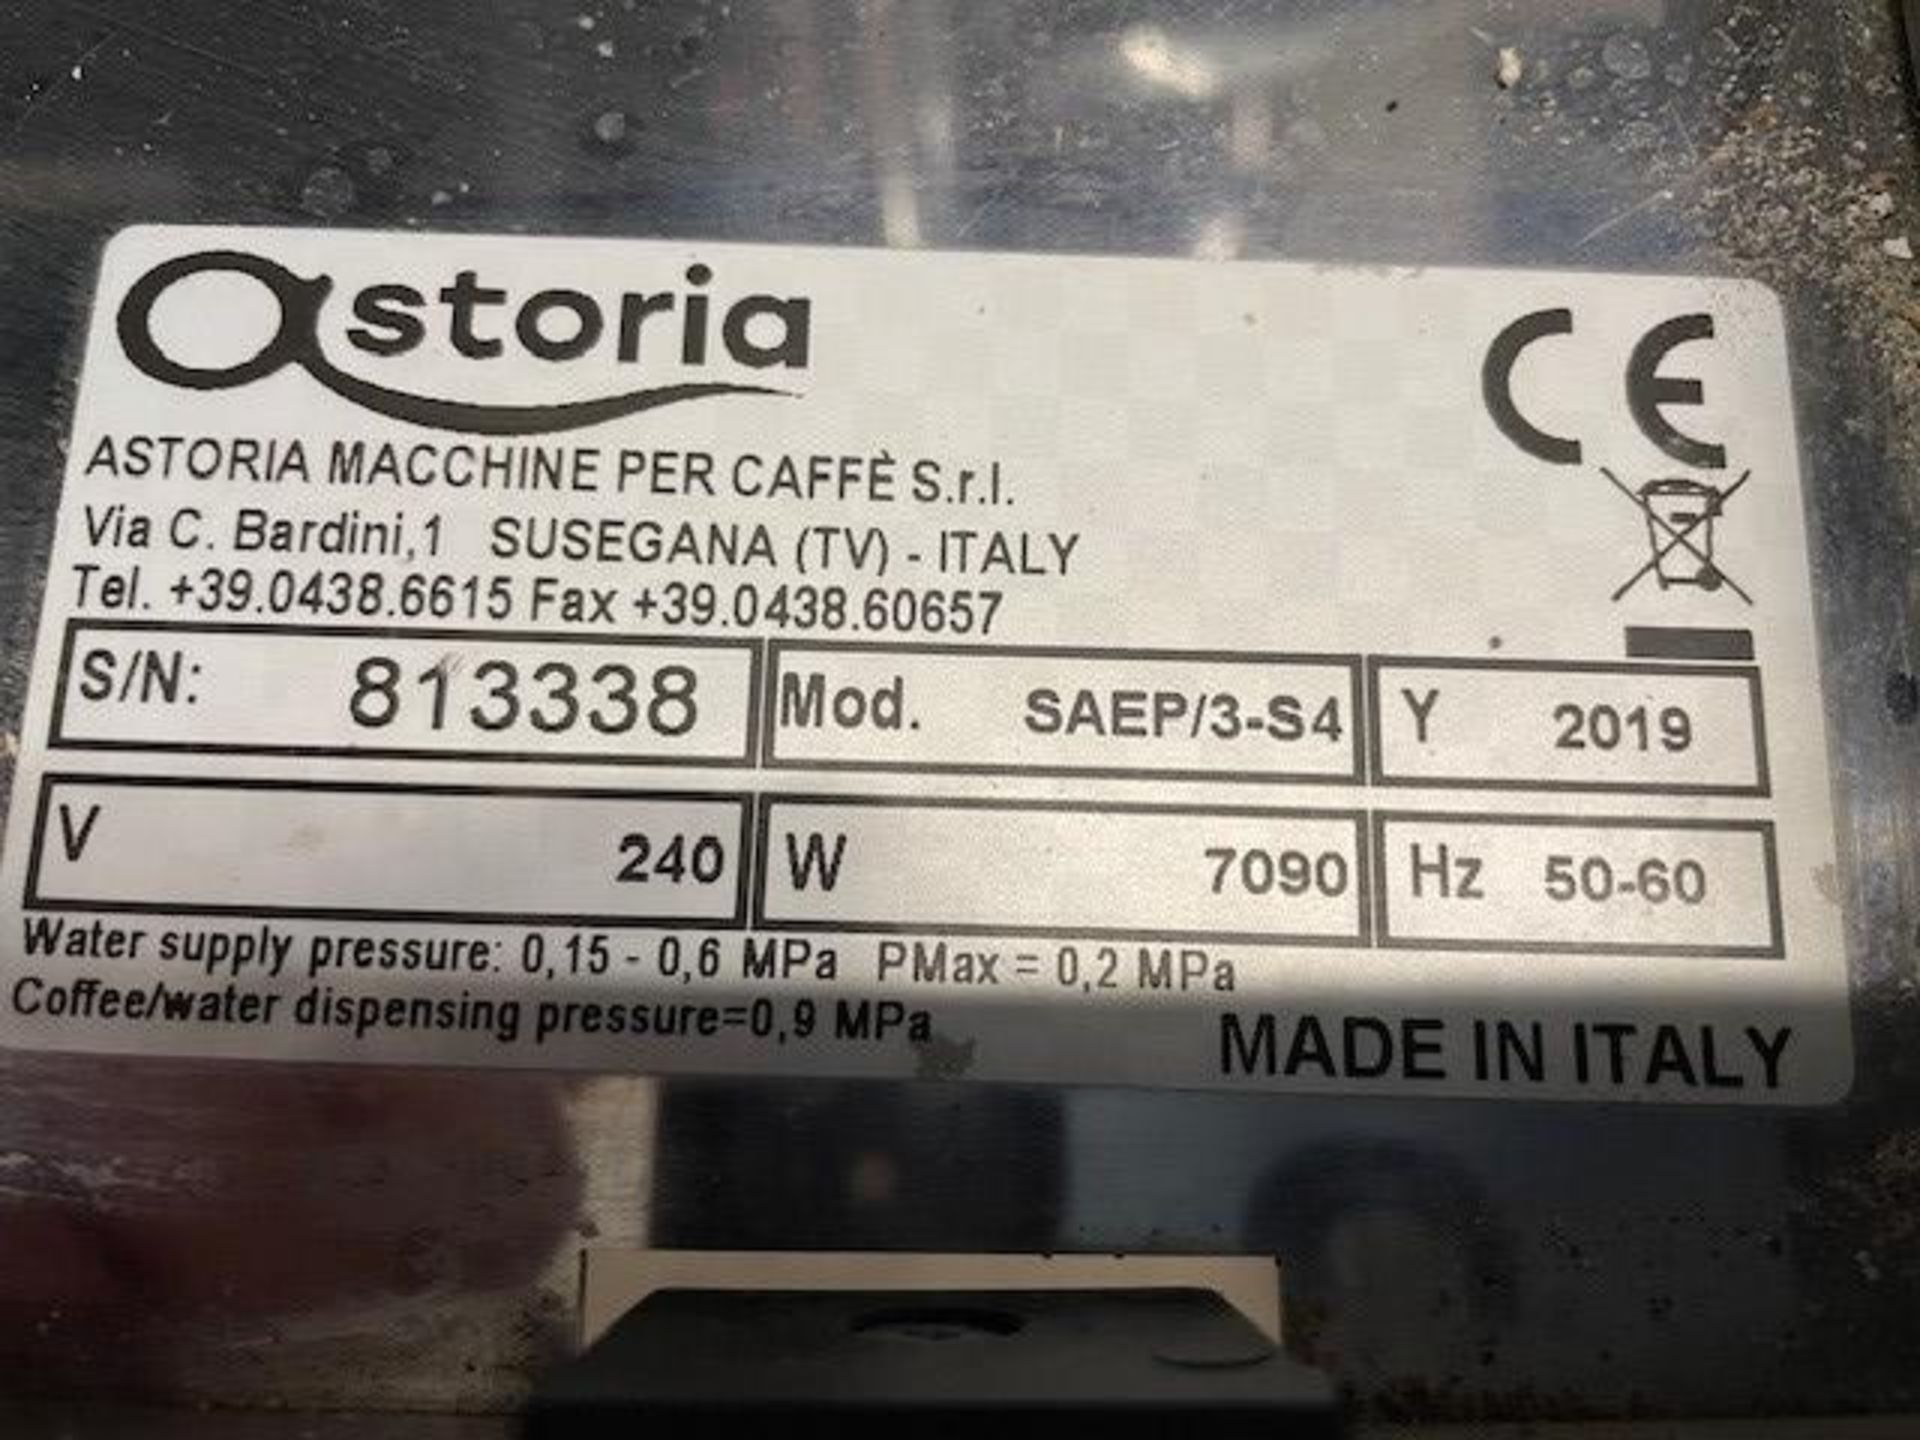 Astoria Storm Espresso Machine Single Phase - Image 9 of 10